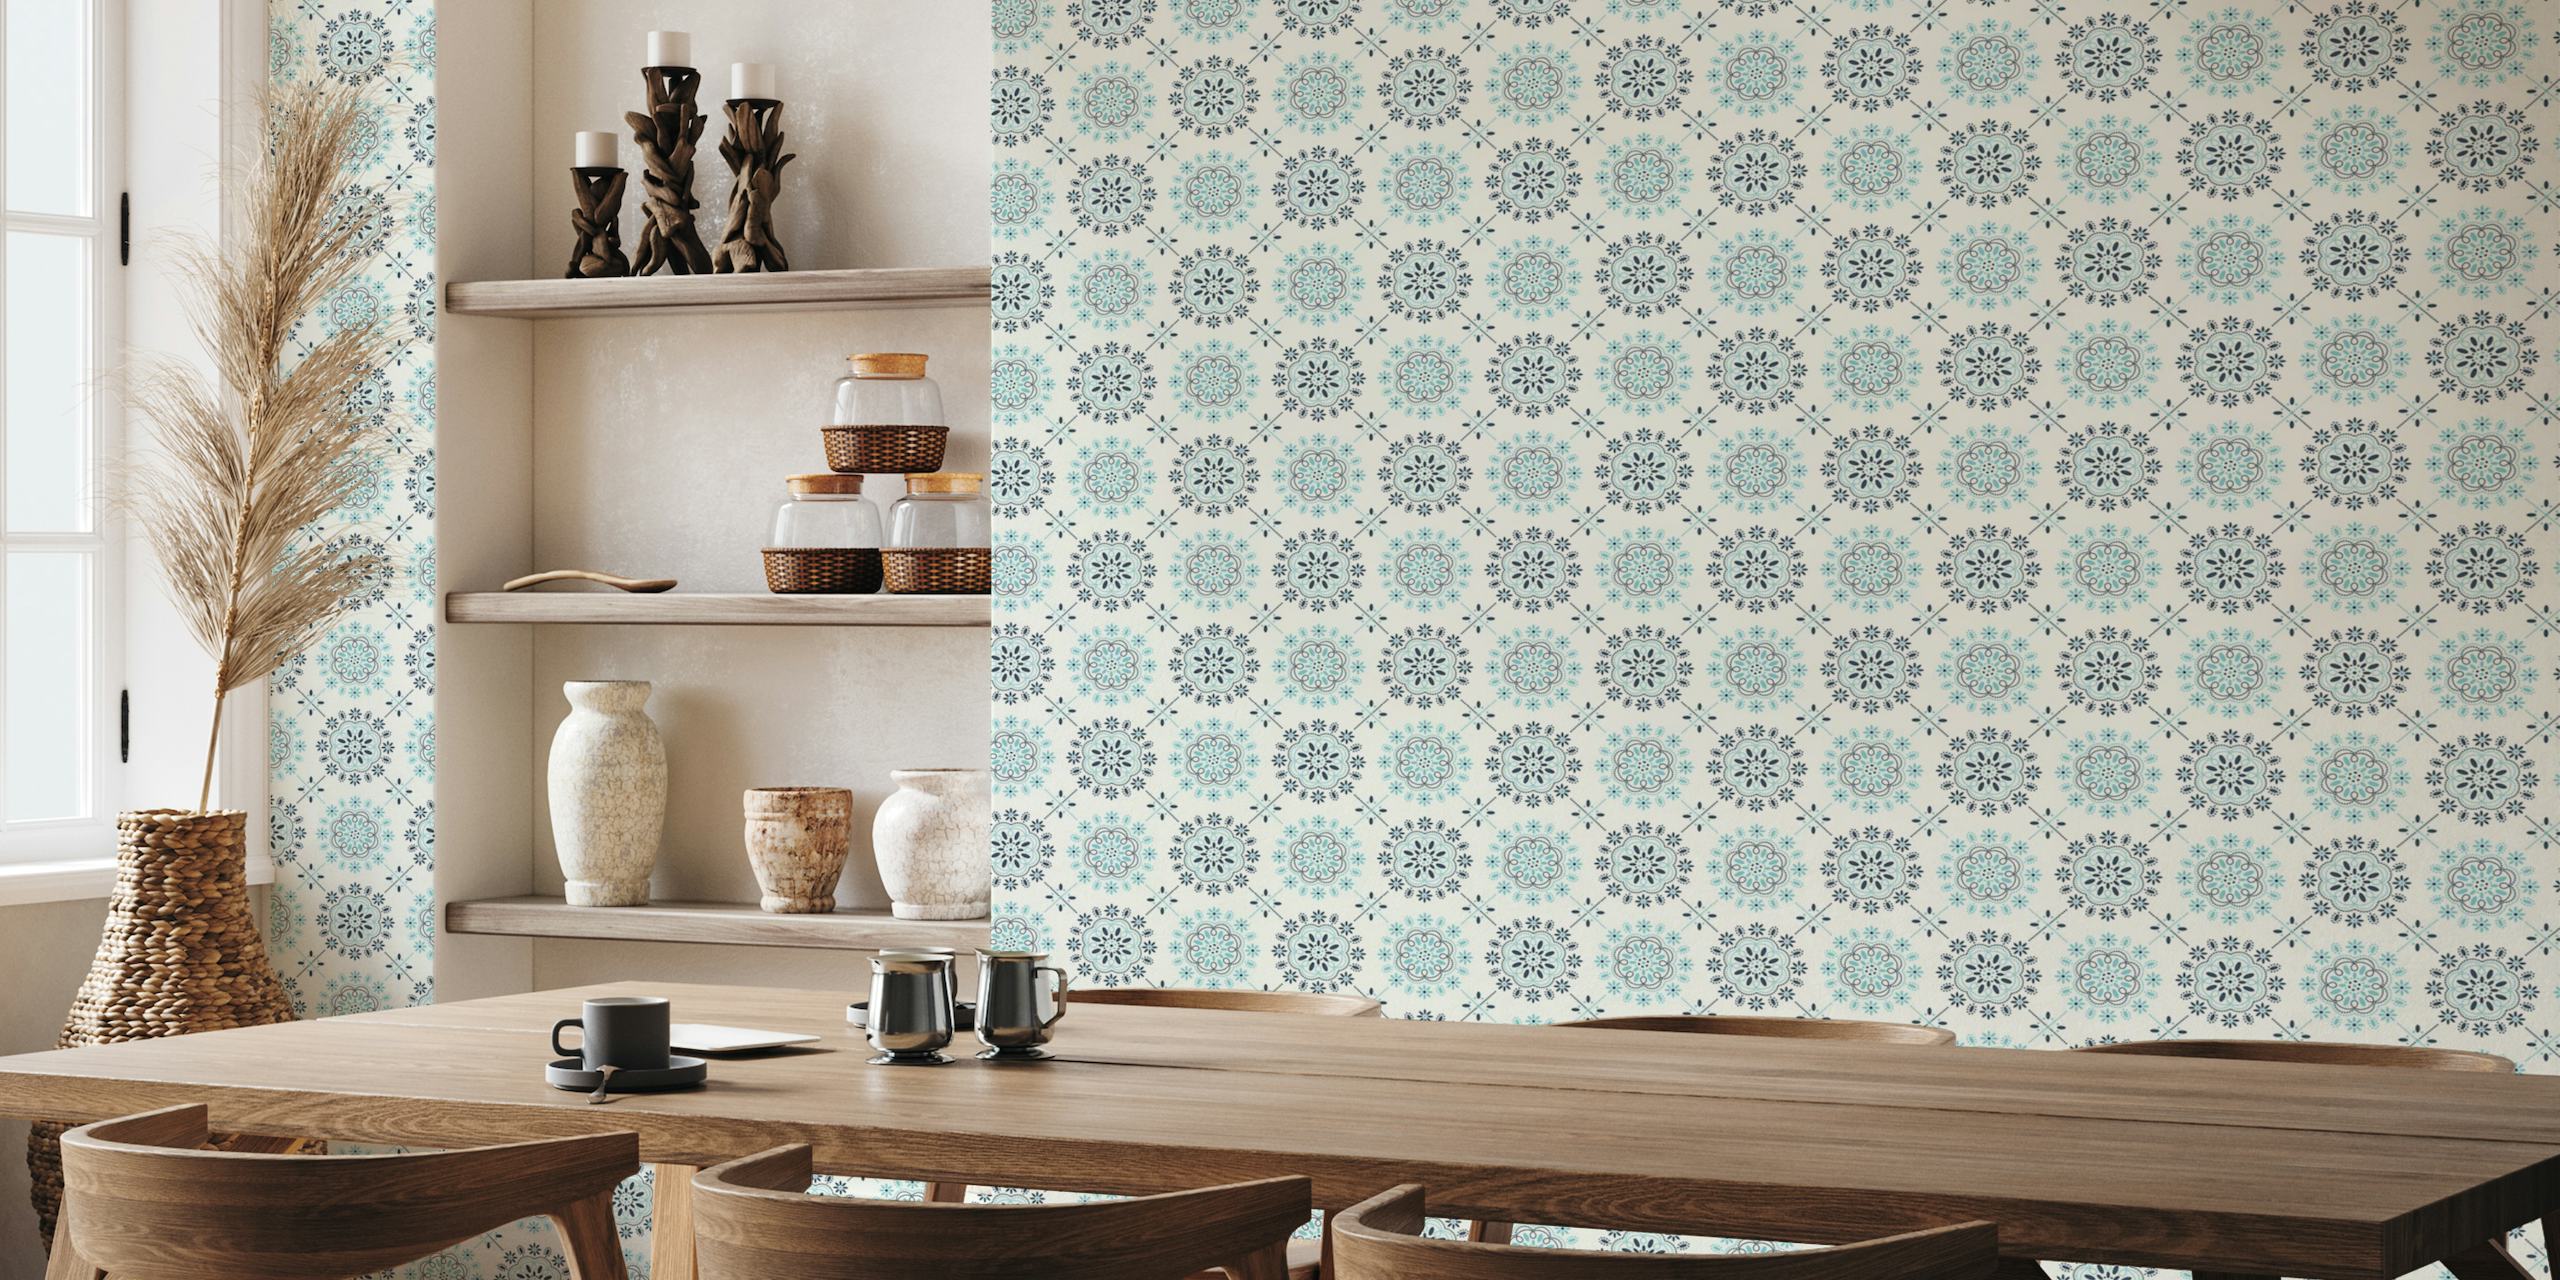 Blue and white kitchen tile tapeta